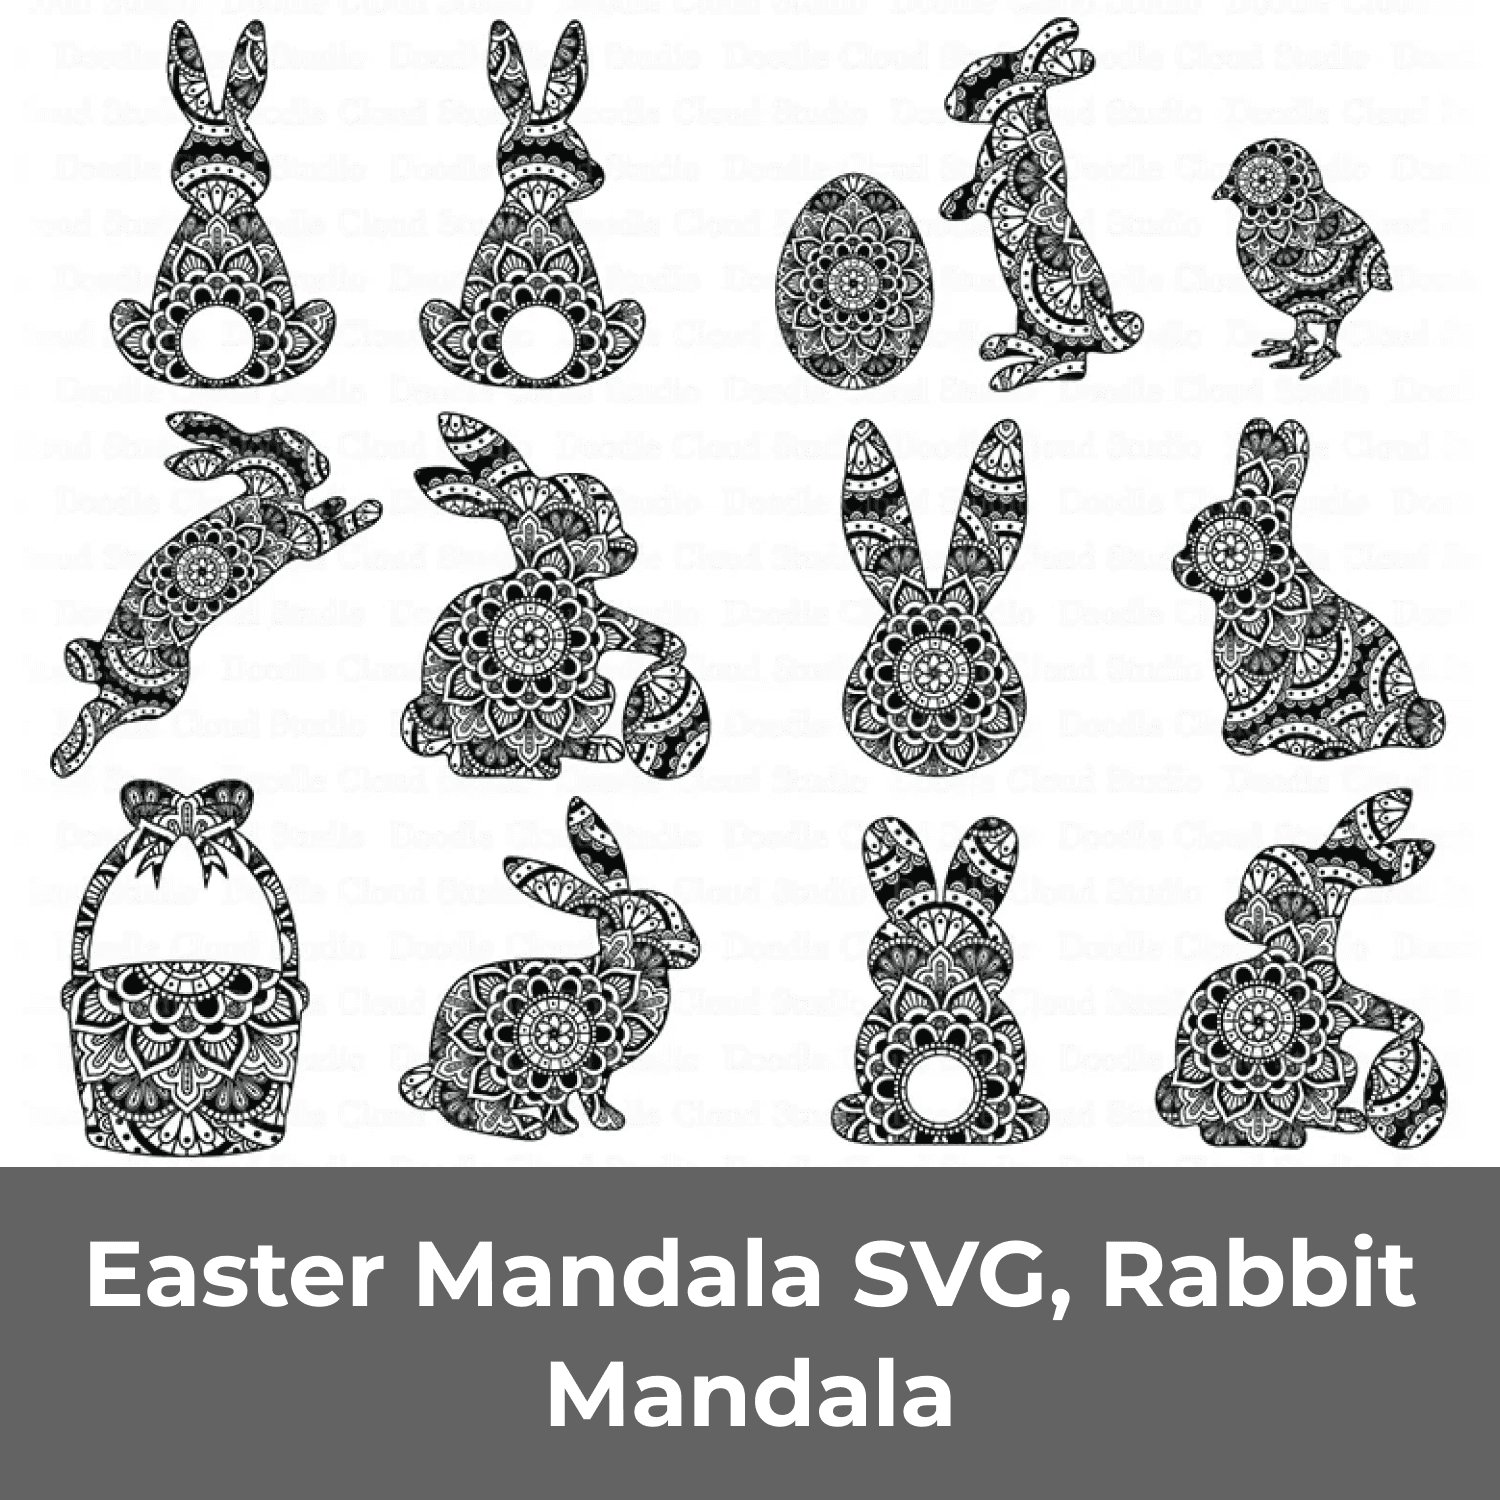 Easter Mandala SVG, Rabbit Mandala cover.